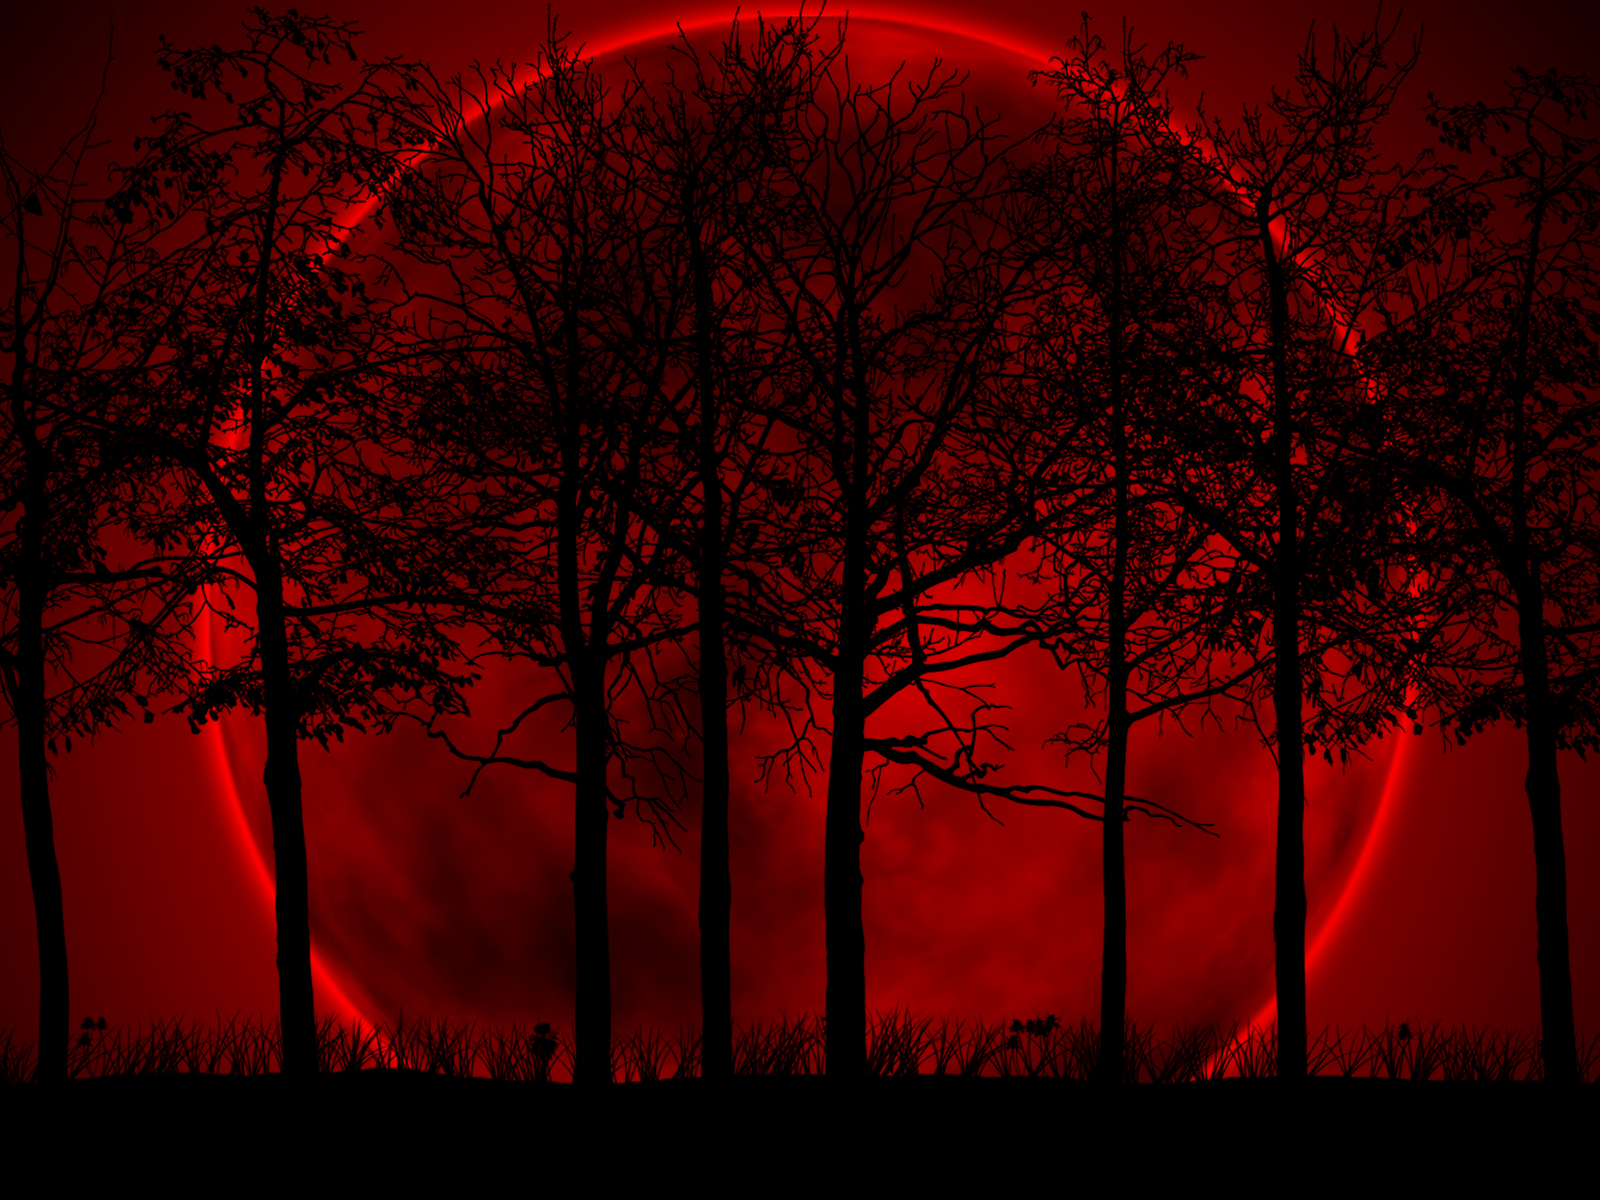 schwarze und rote tapete,rot,roter himmel am morgen,natur,himmel,baum